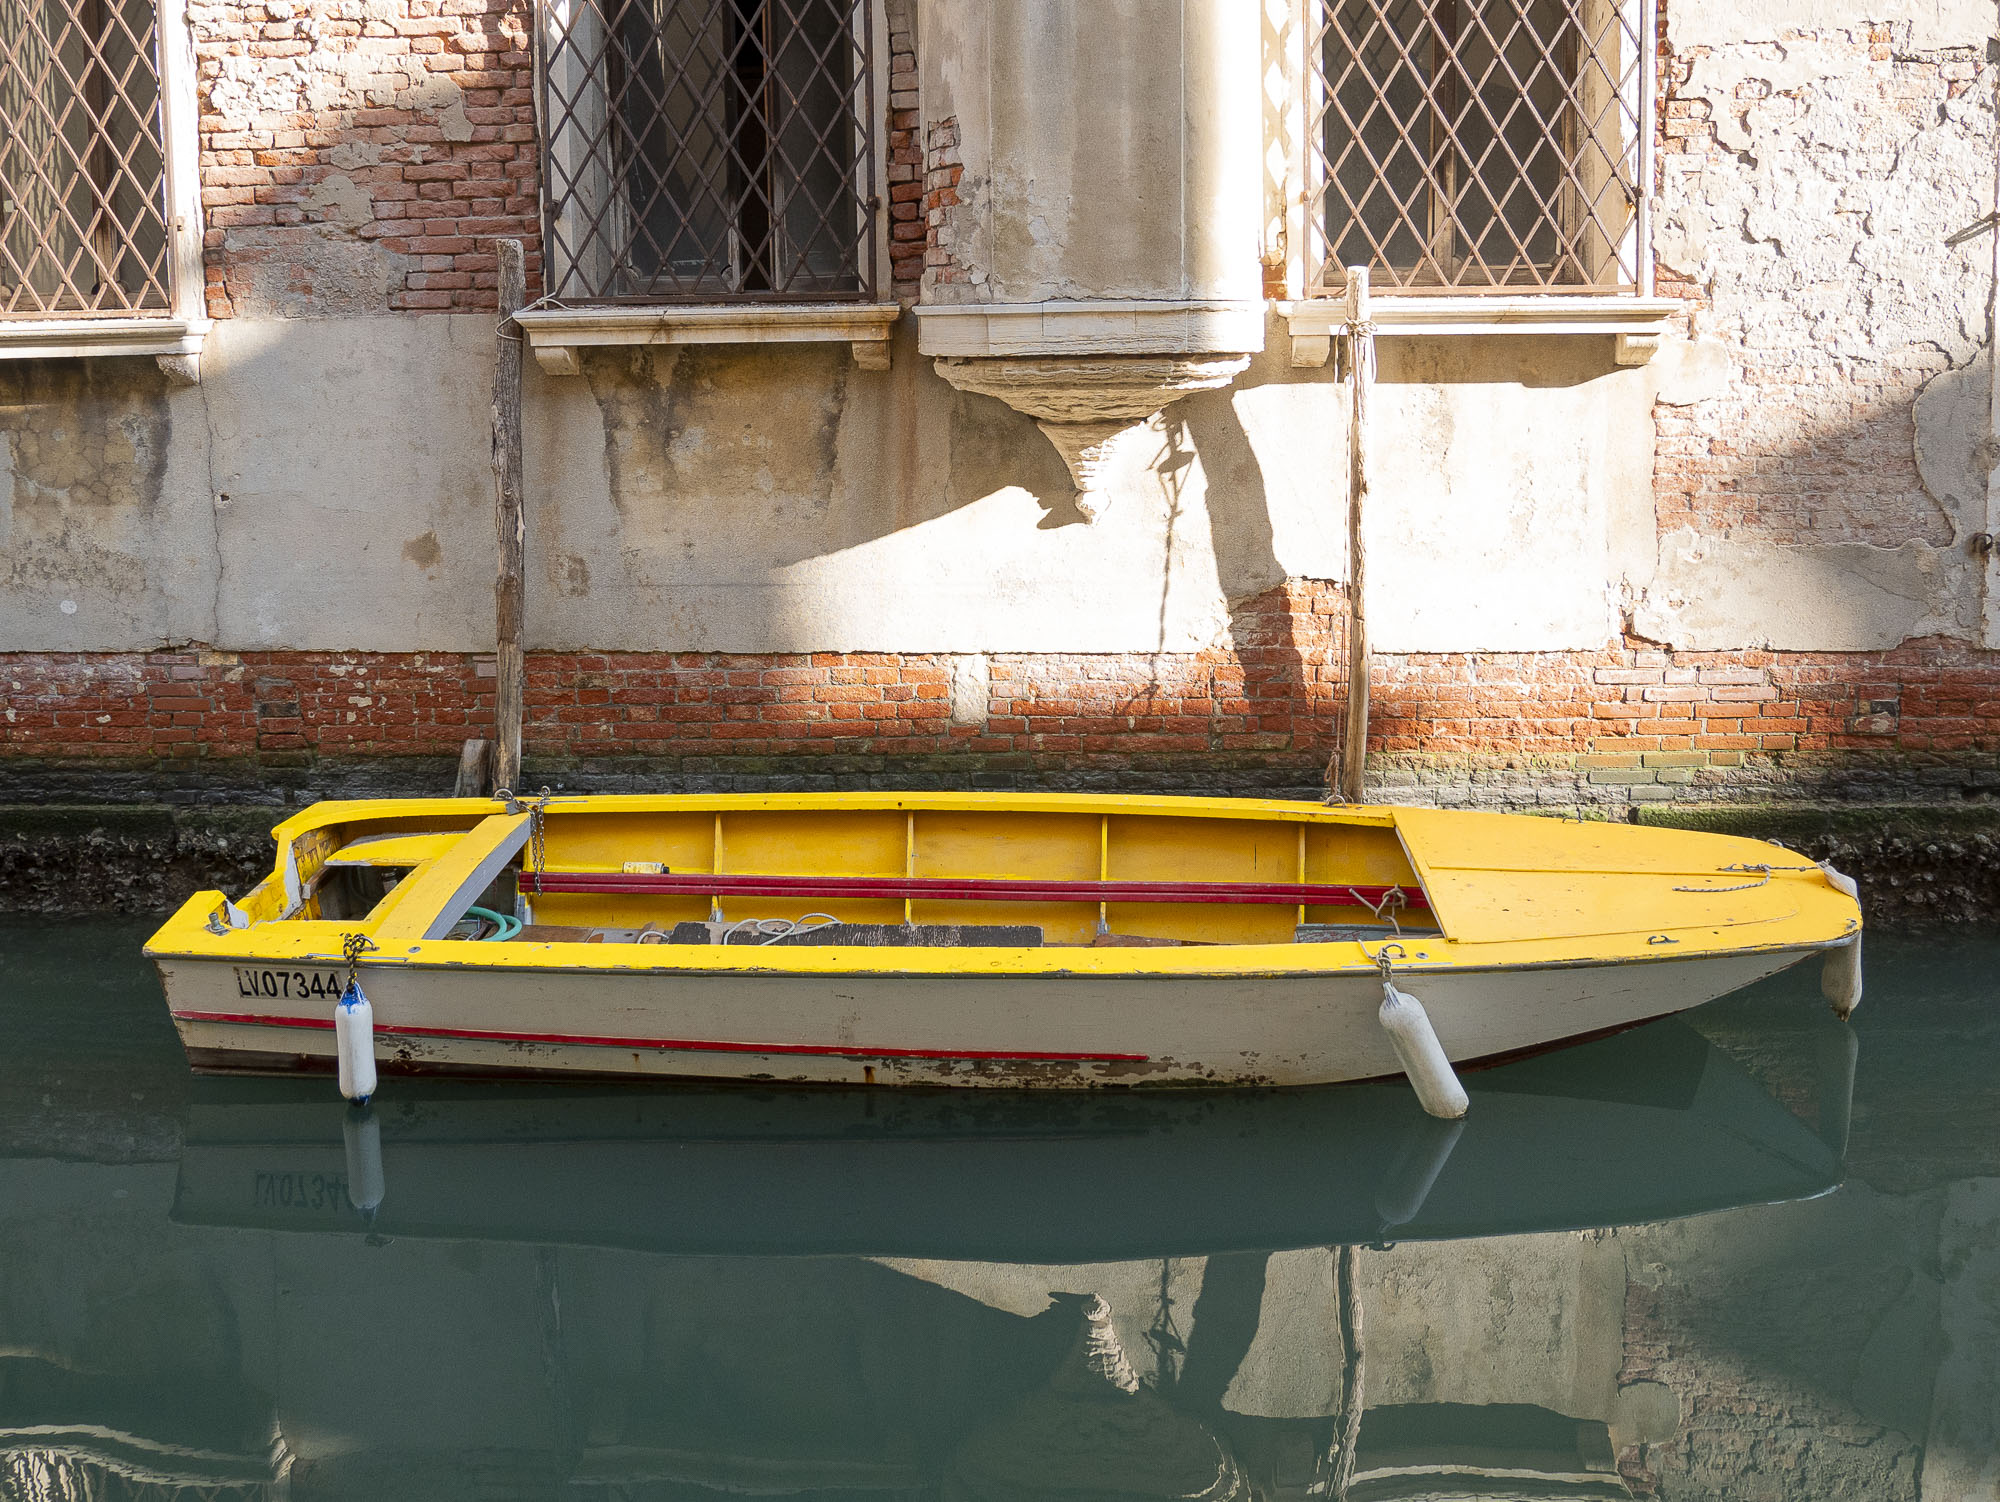 Jarred Elrod, Photography, Venezia, Venice, Travel, Photo, Still Photo, Photographer, American, Italy